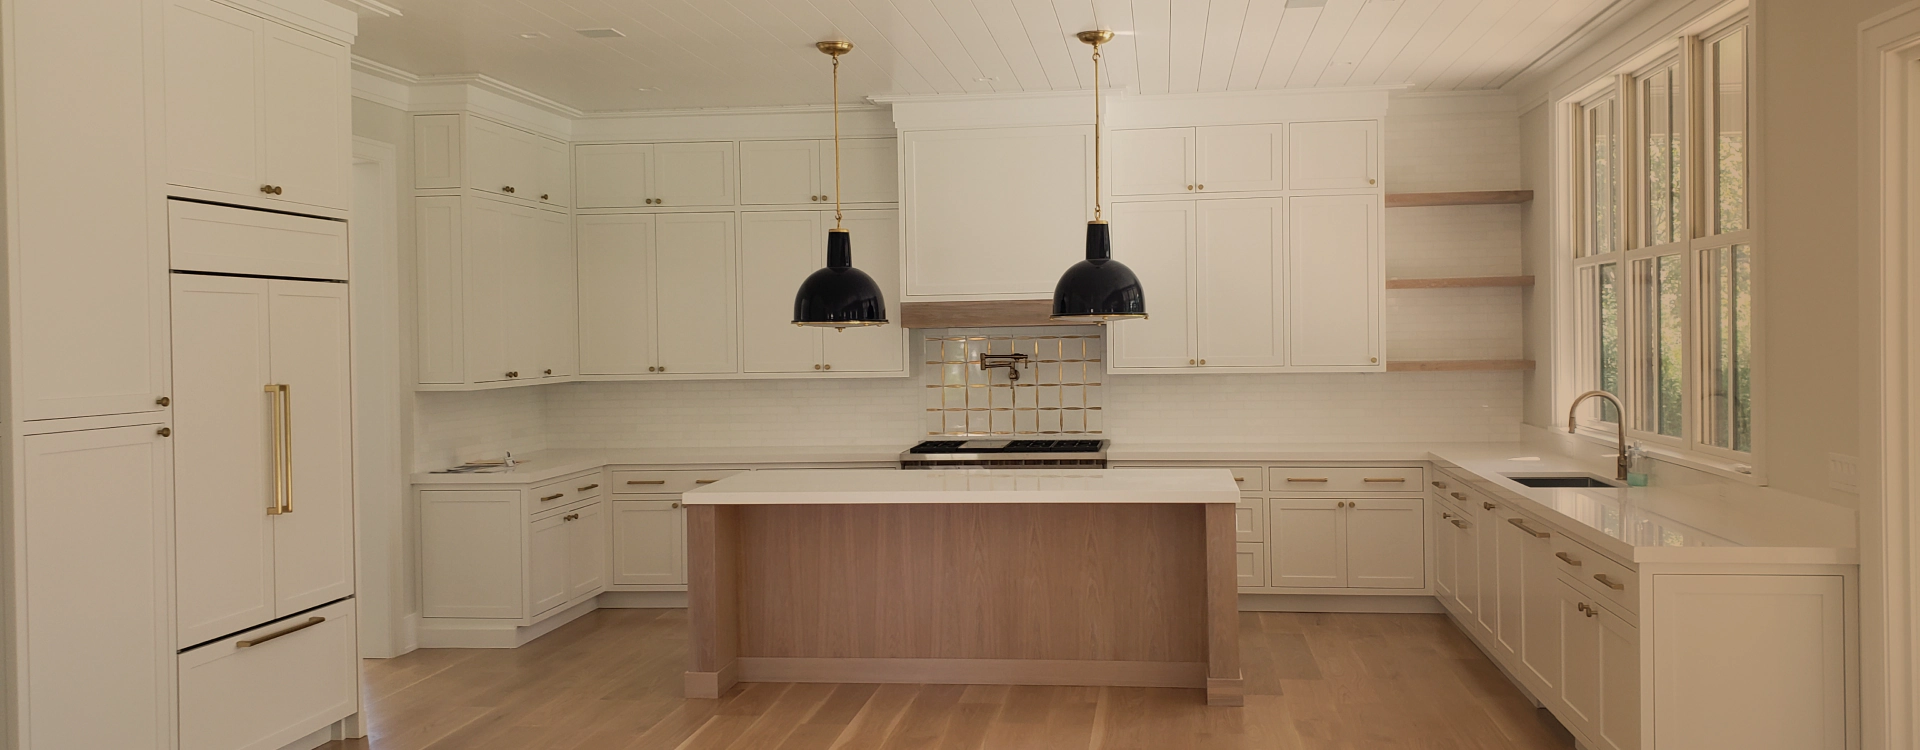 elegant kitchen area with countertop